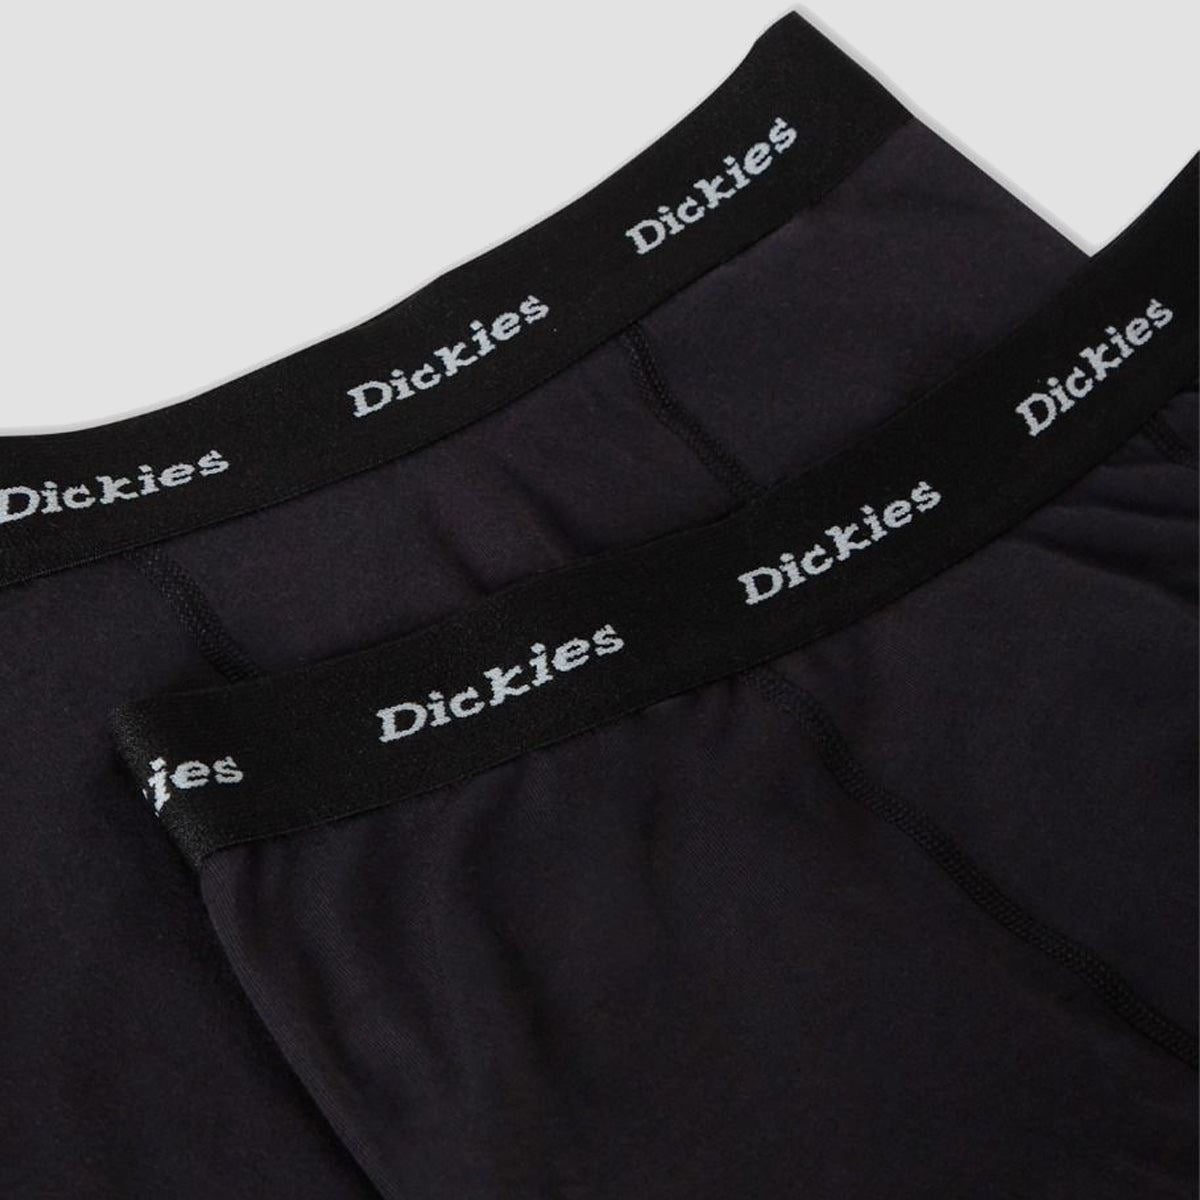 Dickies Trunk Boxer Shorts 2 Pack Black